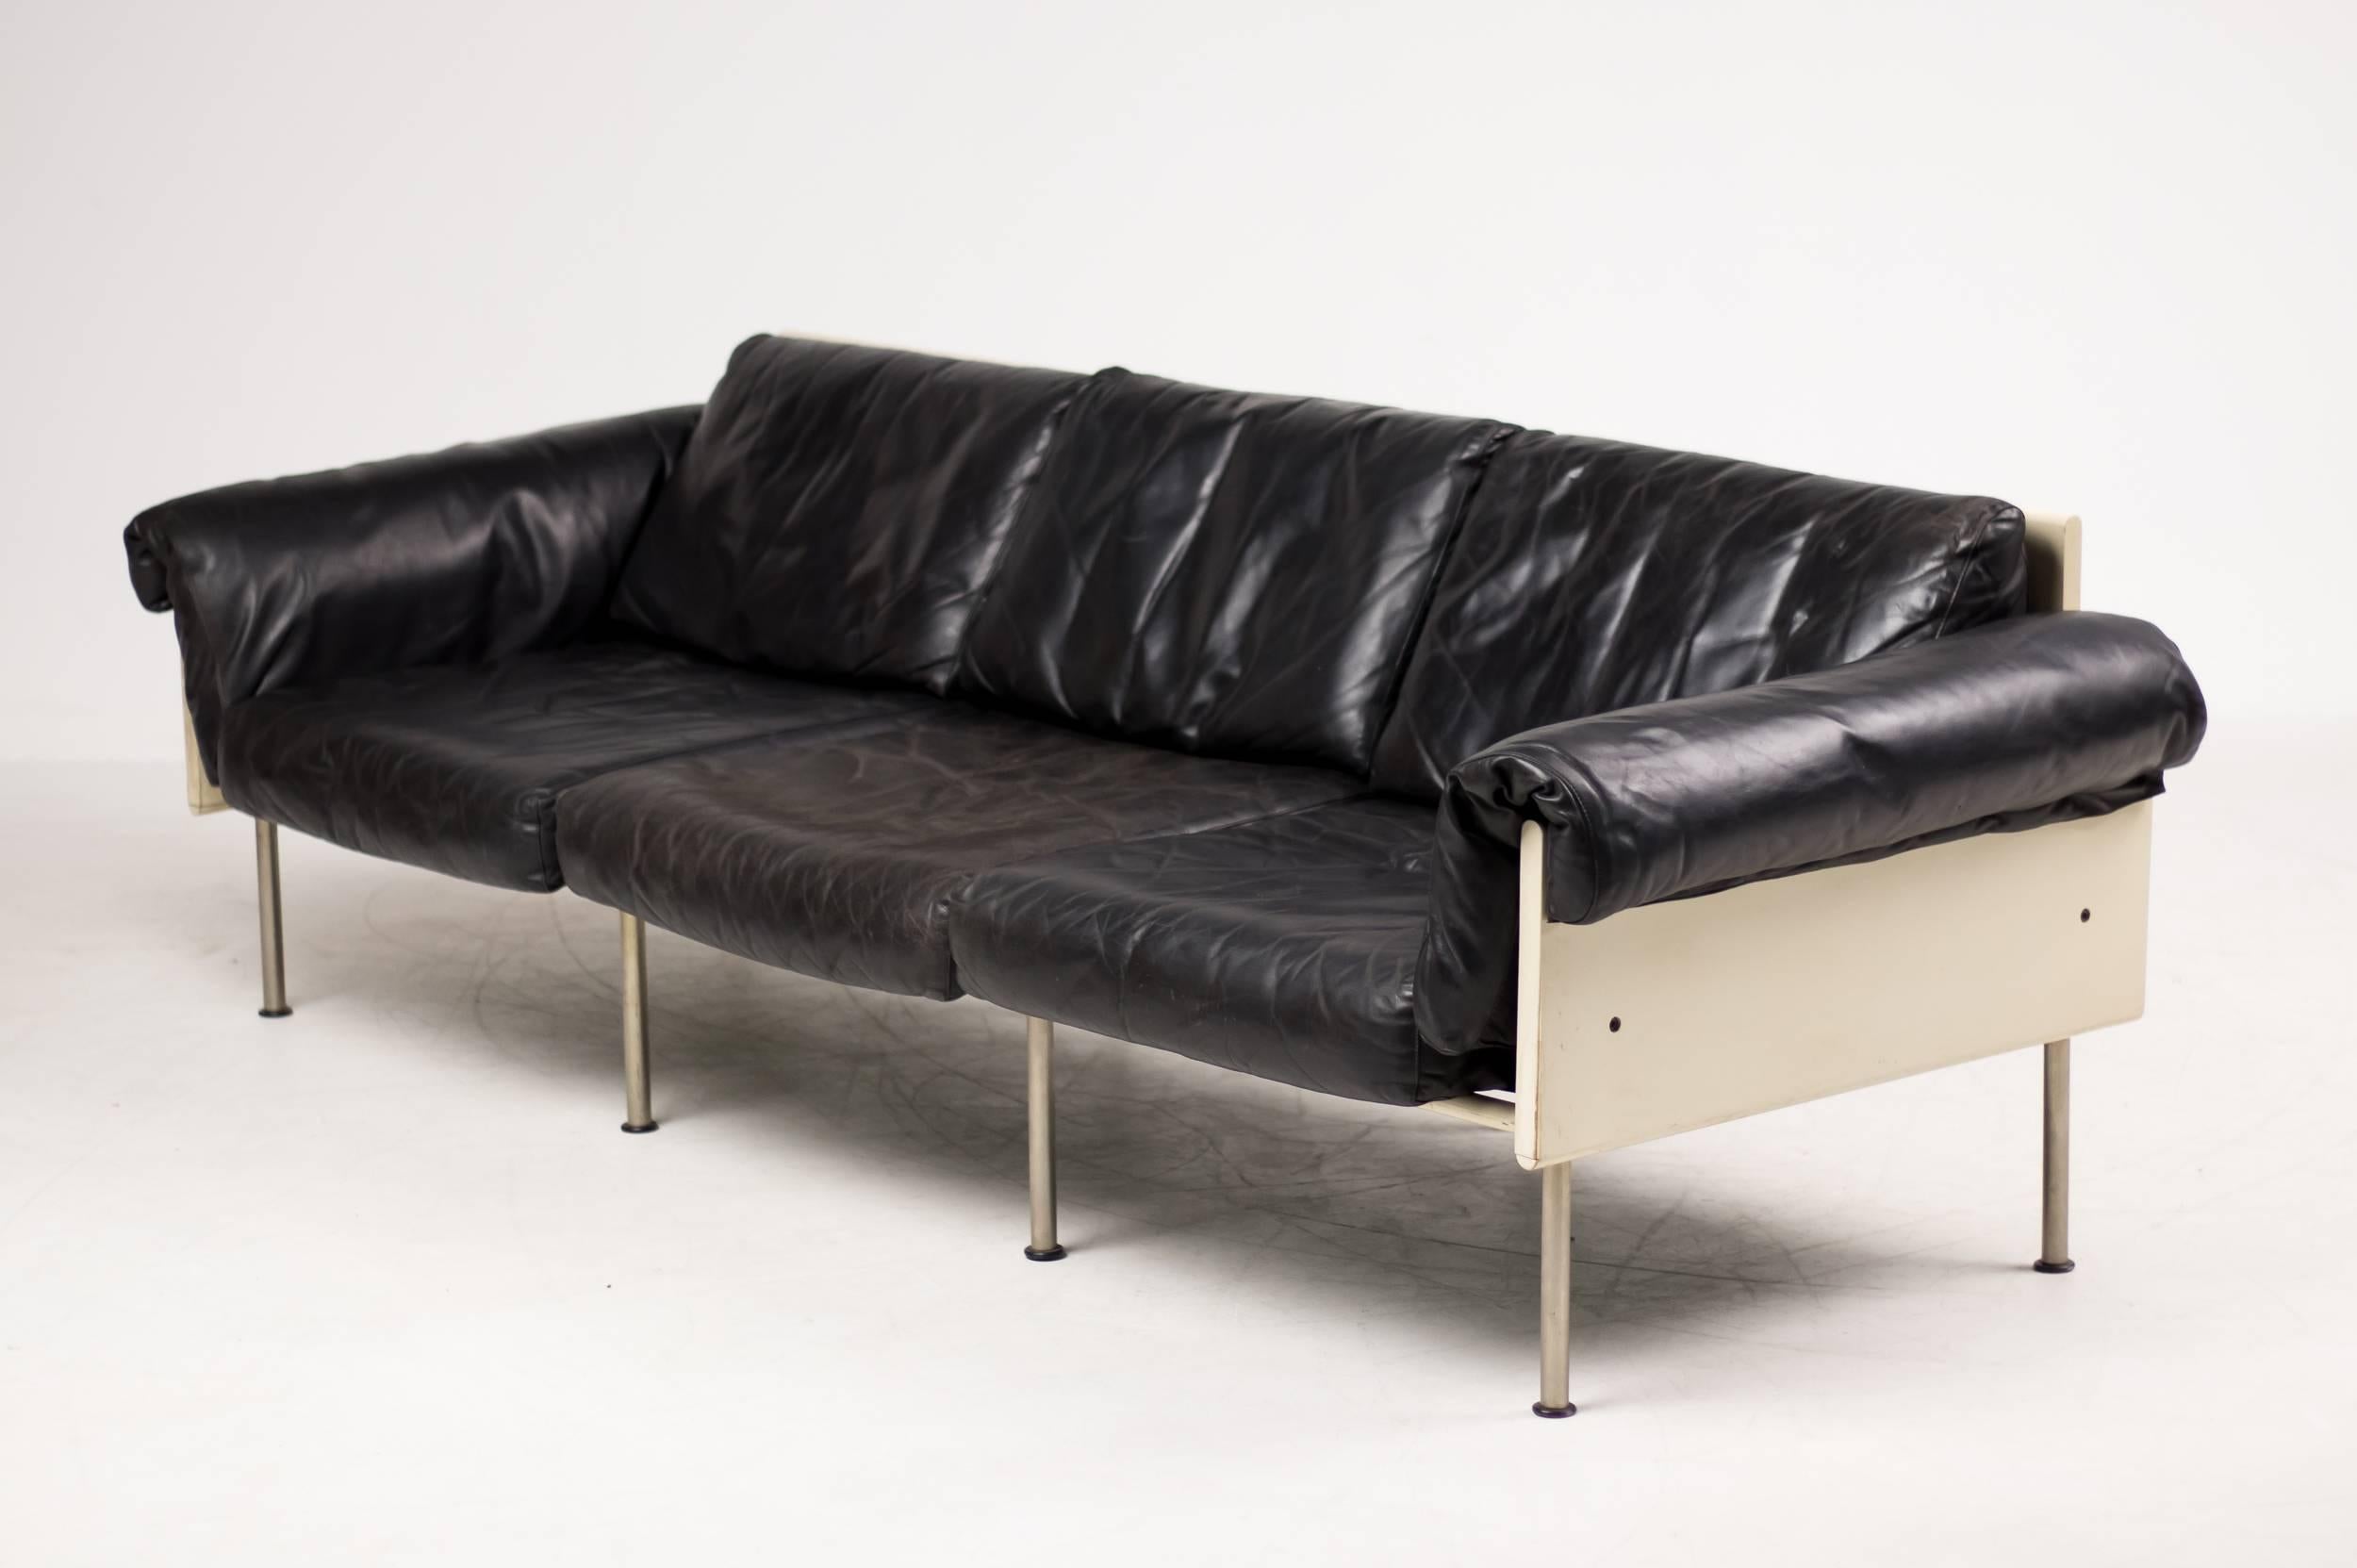 Scandinavian Modern Ateljee Three-Seat Sofa by Yrjö Kukkapuro, Finland